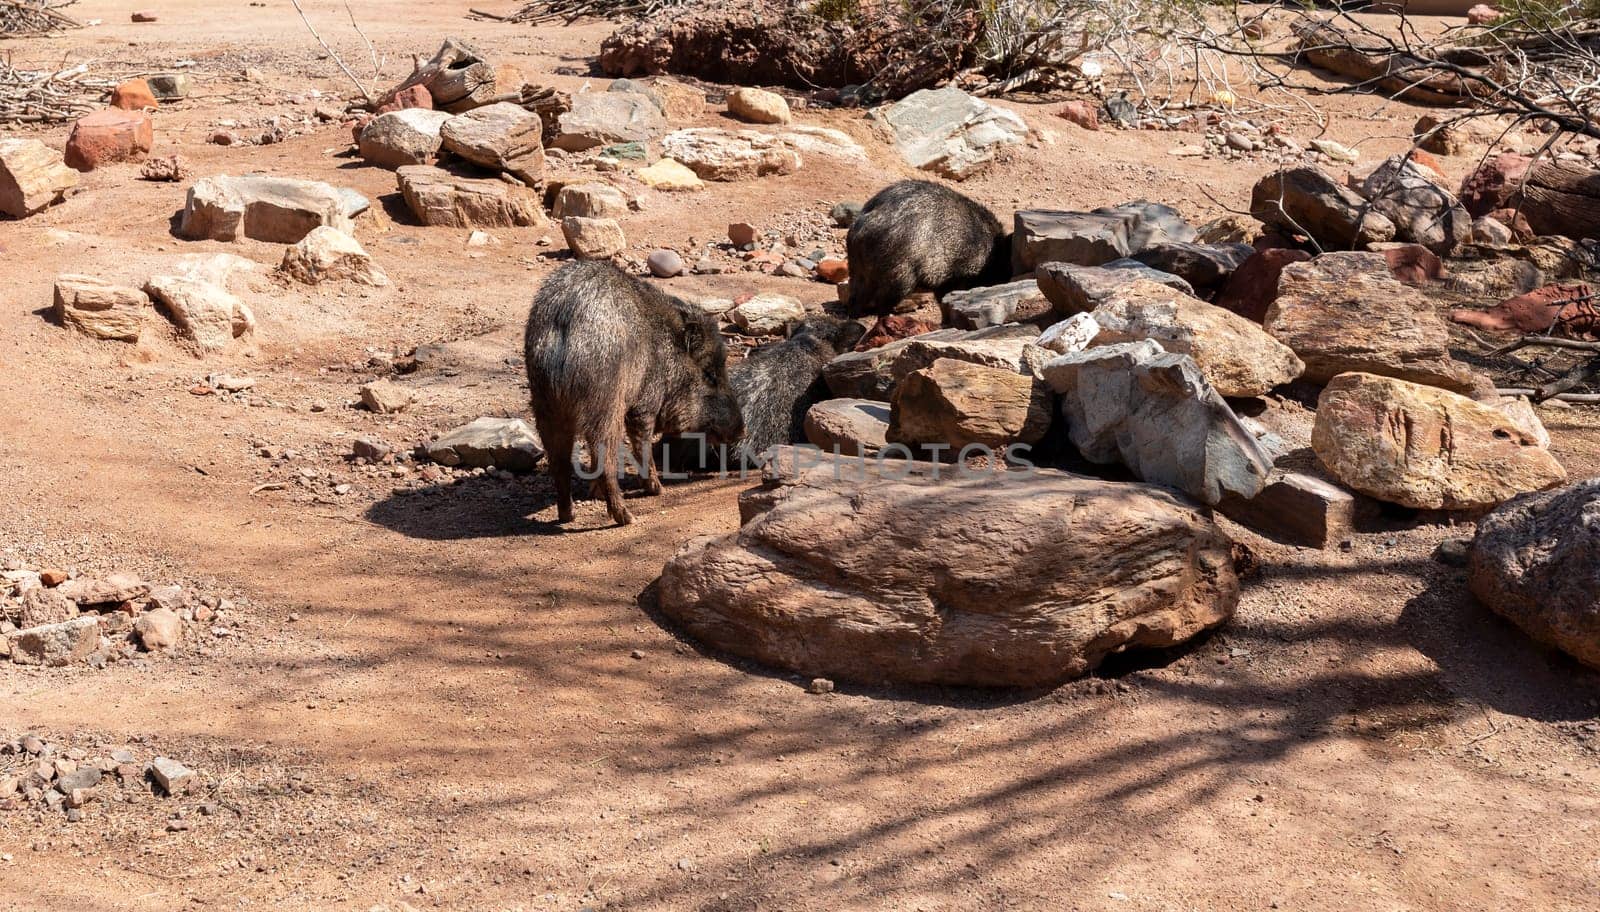 A Group Of Peccary Or Javelina Family In Desert. A Pig-like Ungulate Of The Family Tayassuidae. Wild Pig, Hoofed Mammals In Nature. Wildlife. Horizontal Plane by netatsi